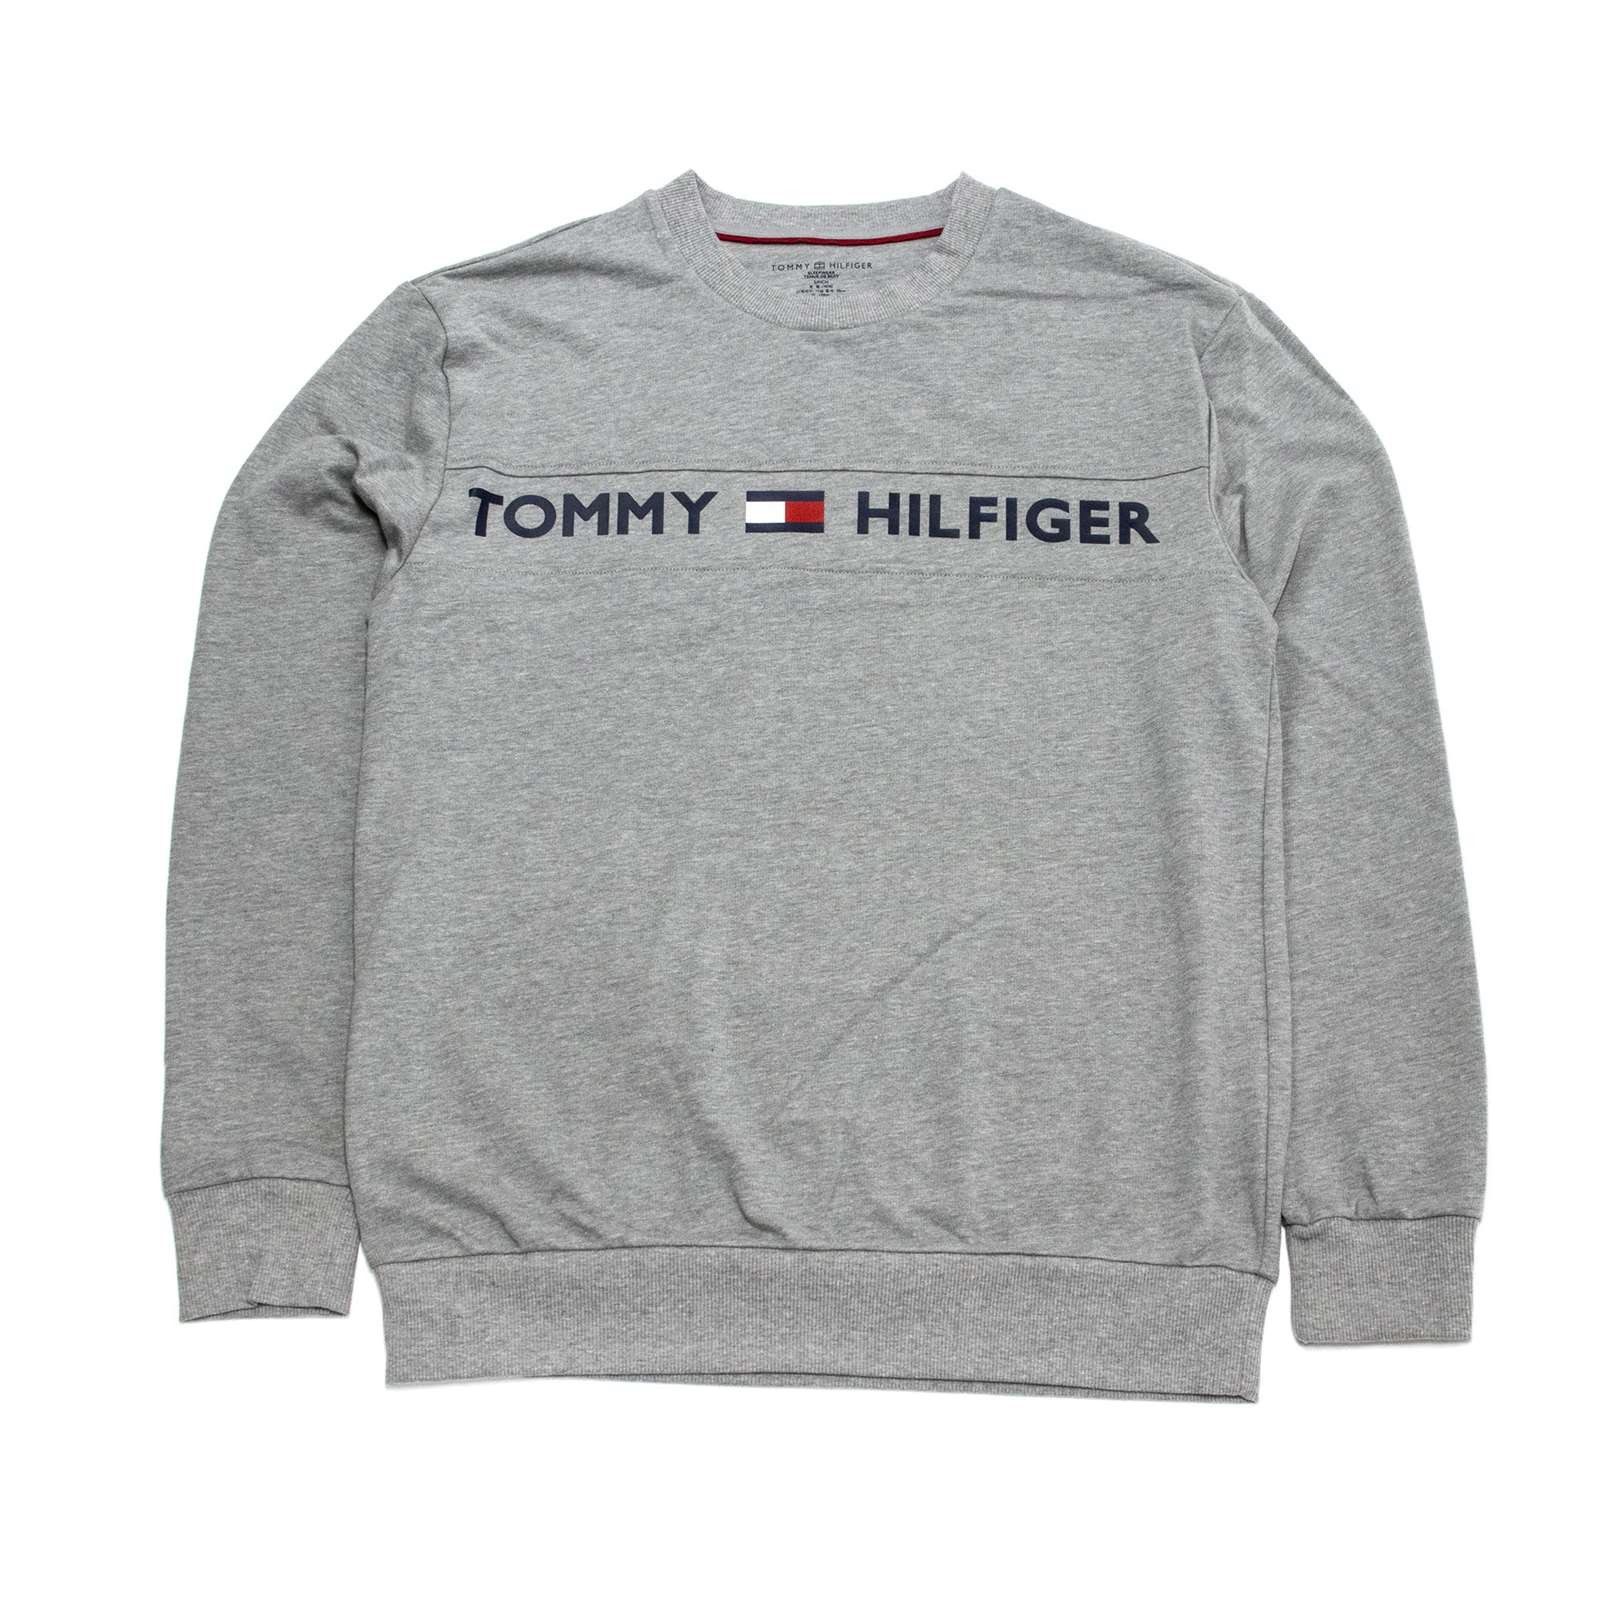 Tommy Hilfiger Mens Light Weight Long Sleeve Hoodie Shirt 